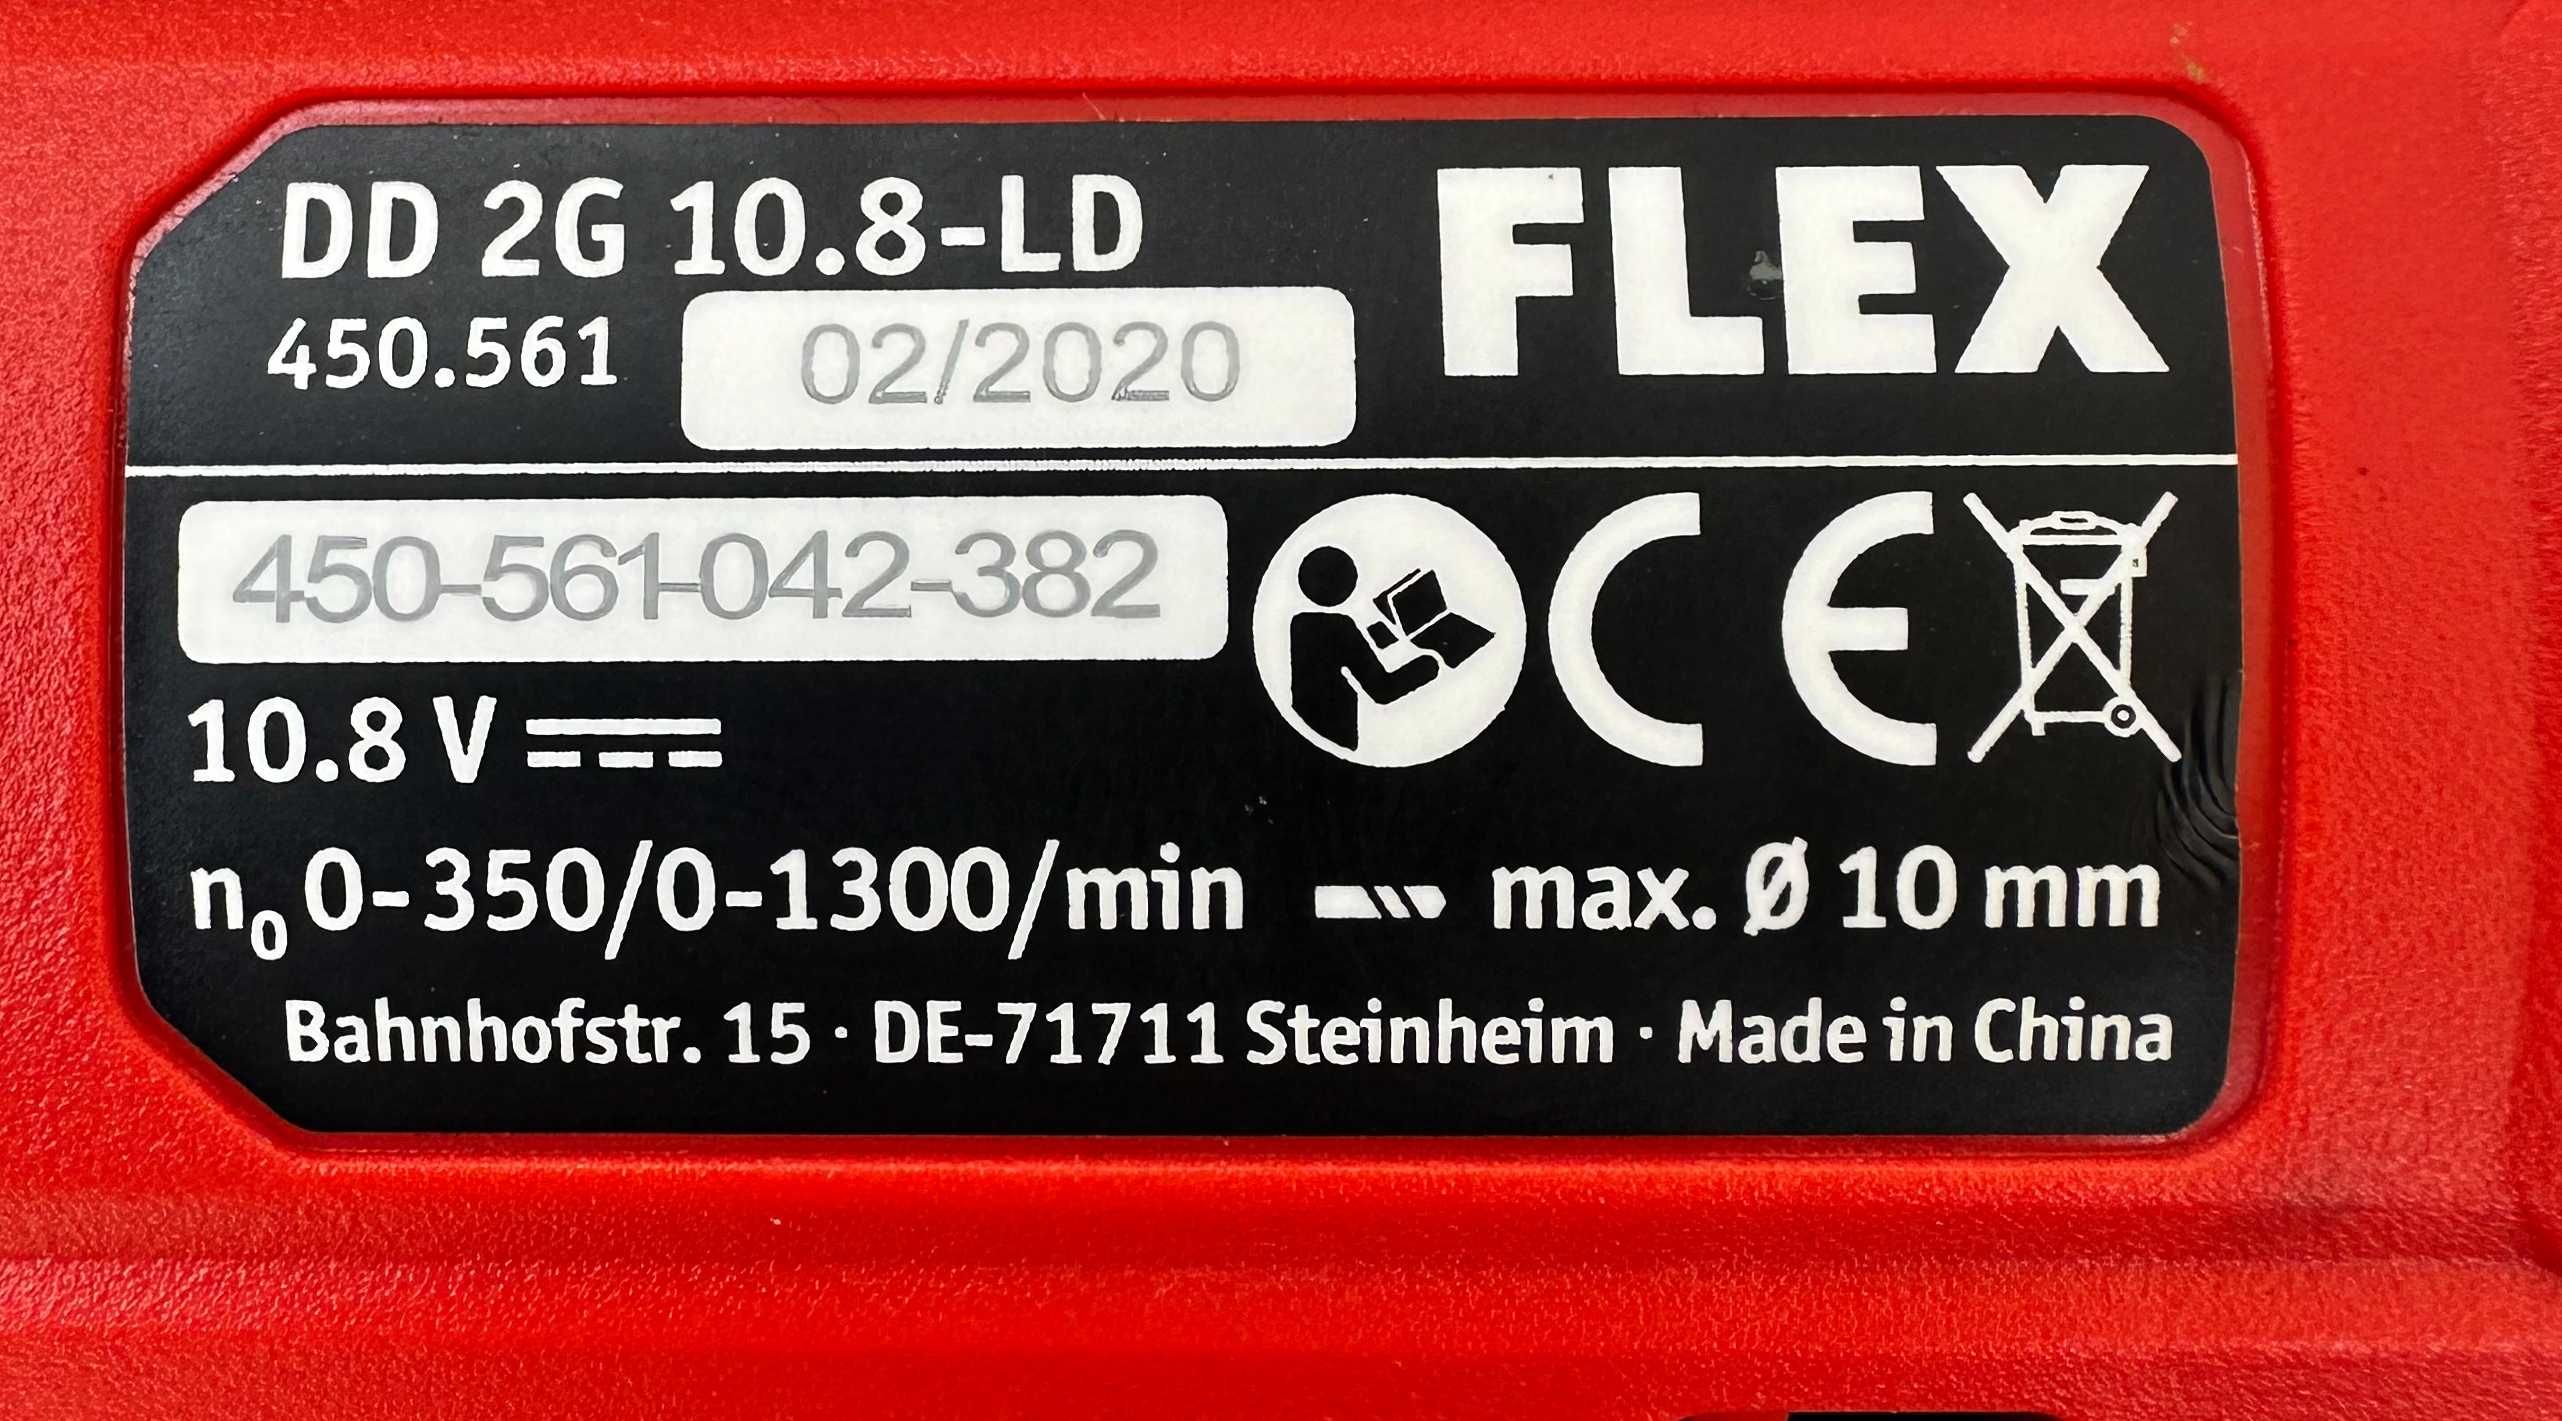 FLEX DD 2G 10.8-LD - Акумулаторен винтоверт